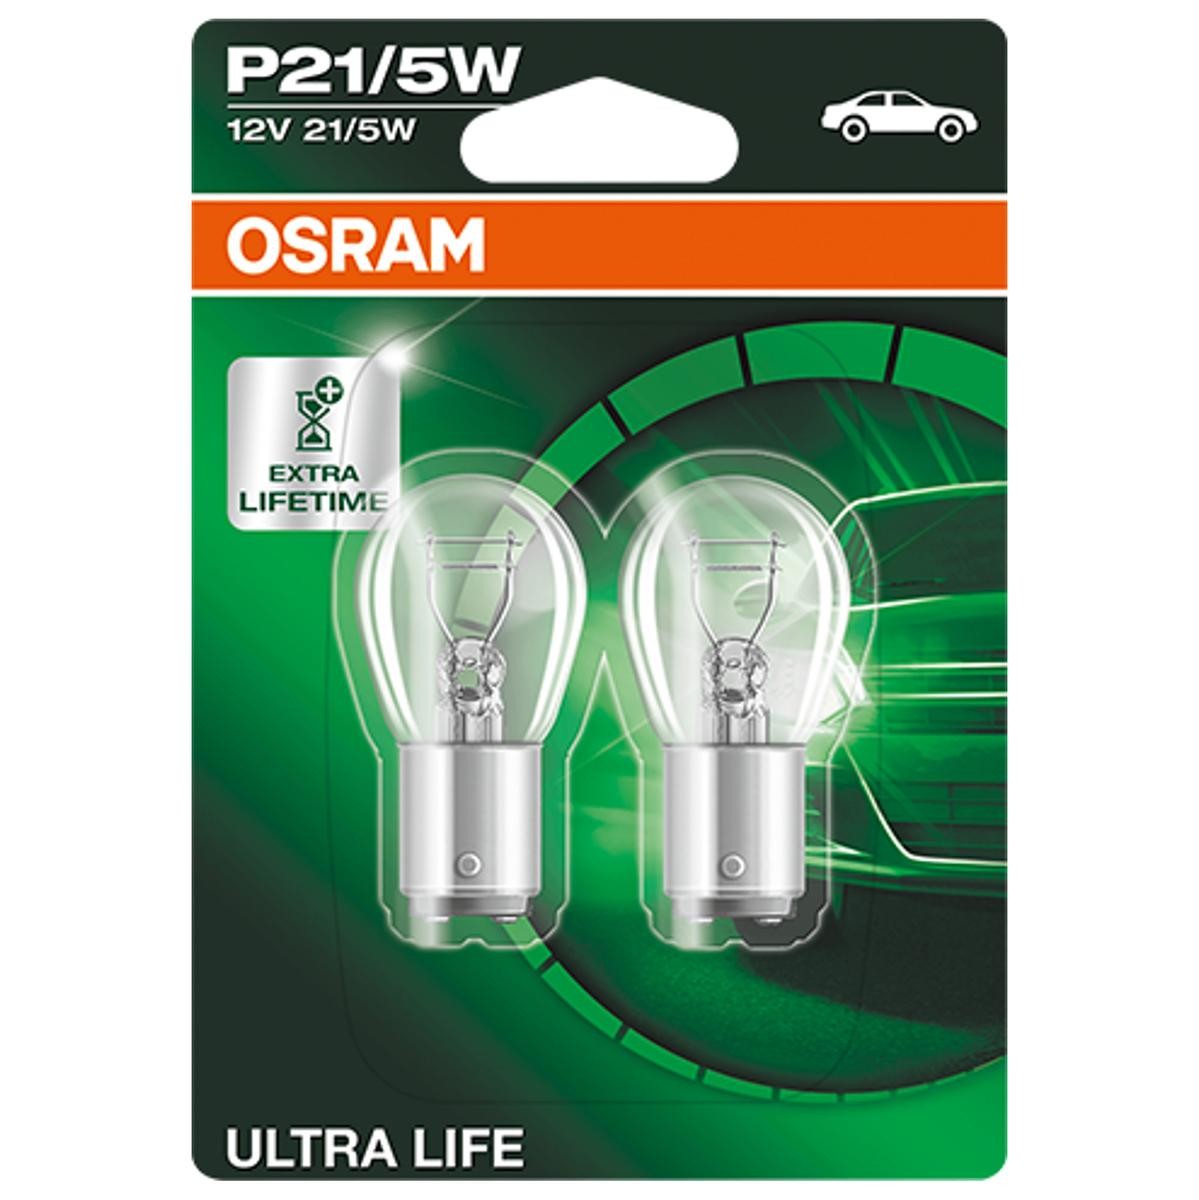 P21/5W OSRAM ULTRA LIFE 7528ULT-02B Indicator bulb